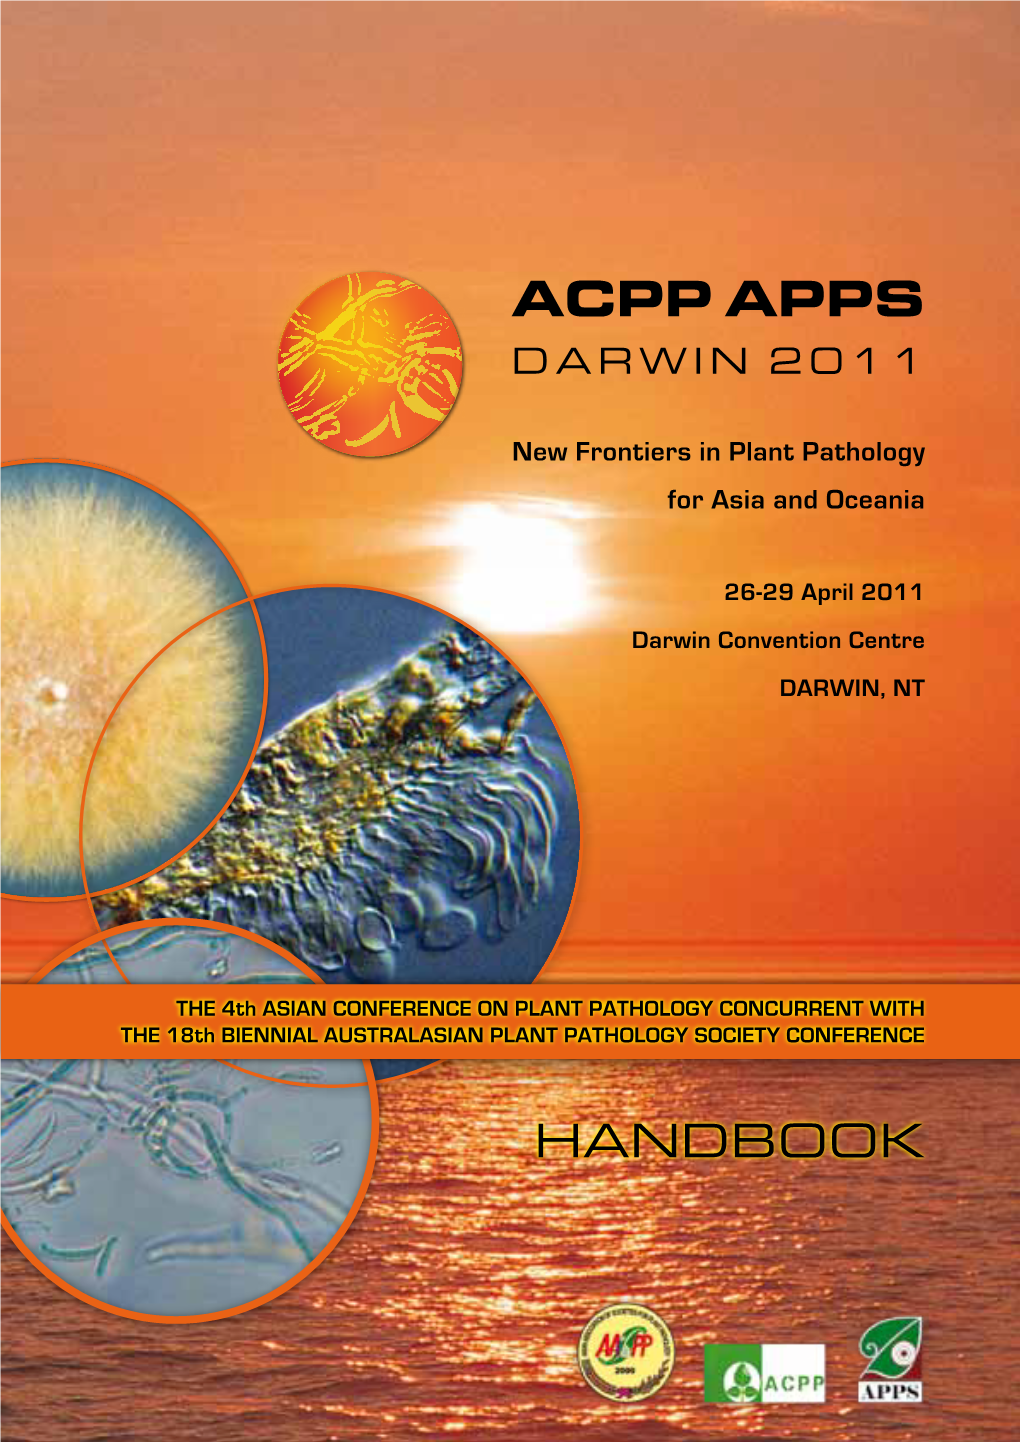 APPS 2011 Handbook Insideback.Indd 1 6/04/11 4:42 PM